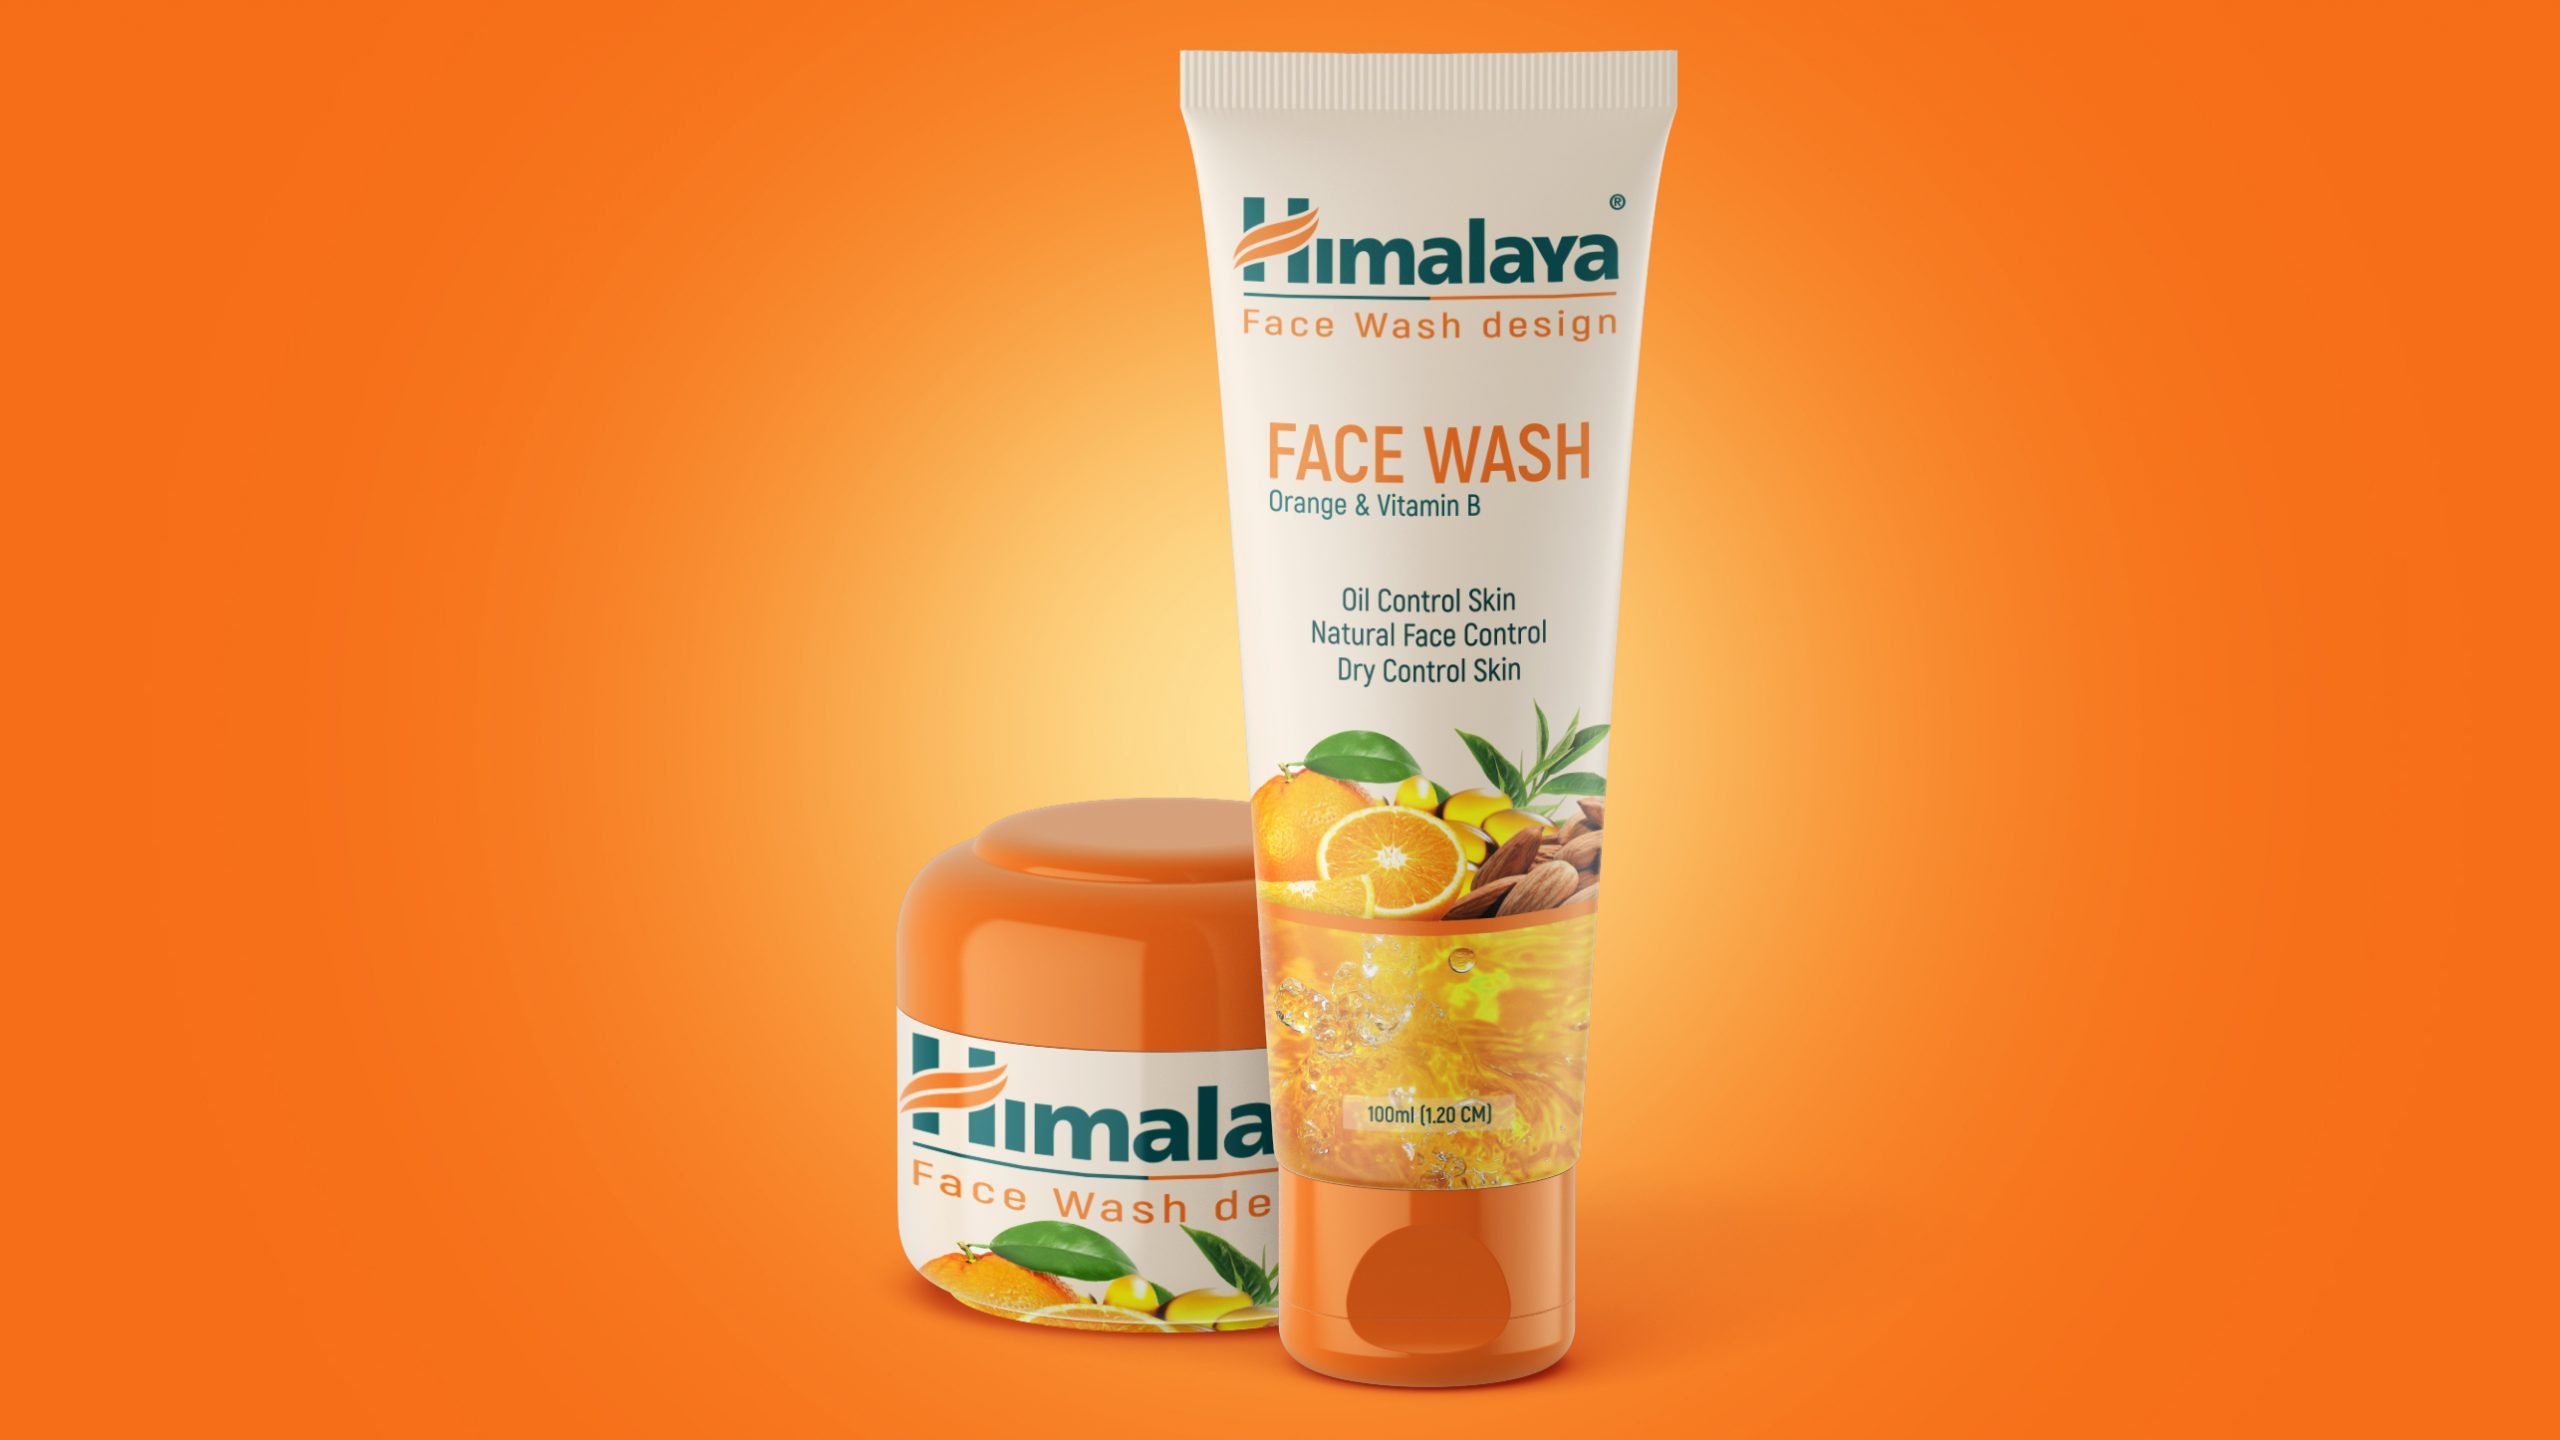 facewash packaging design free download